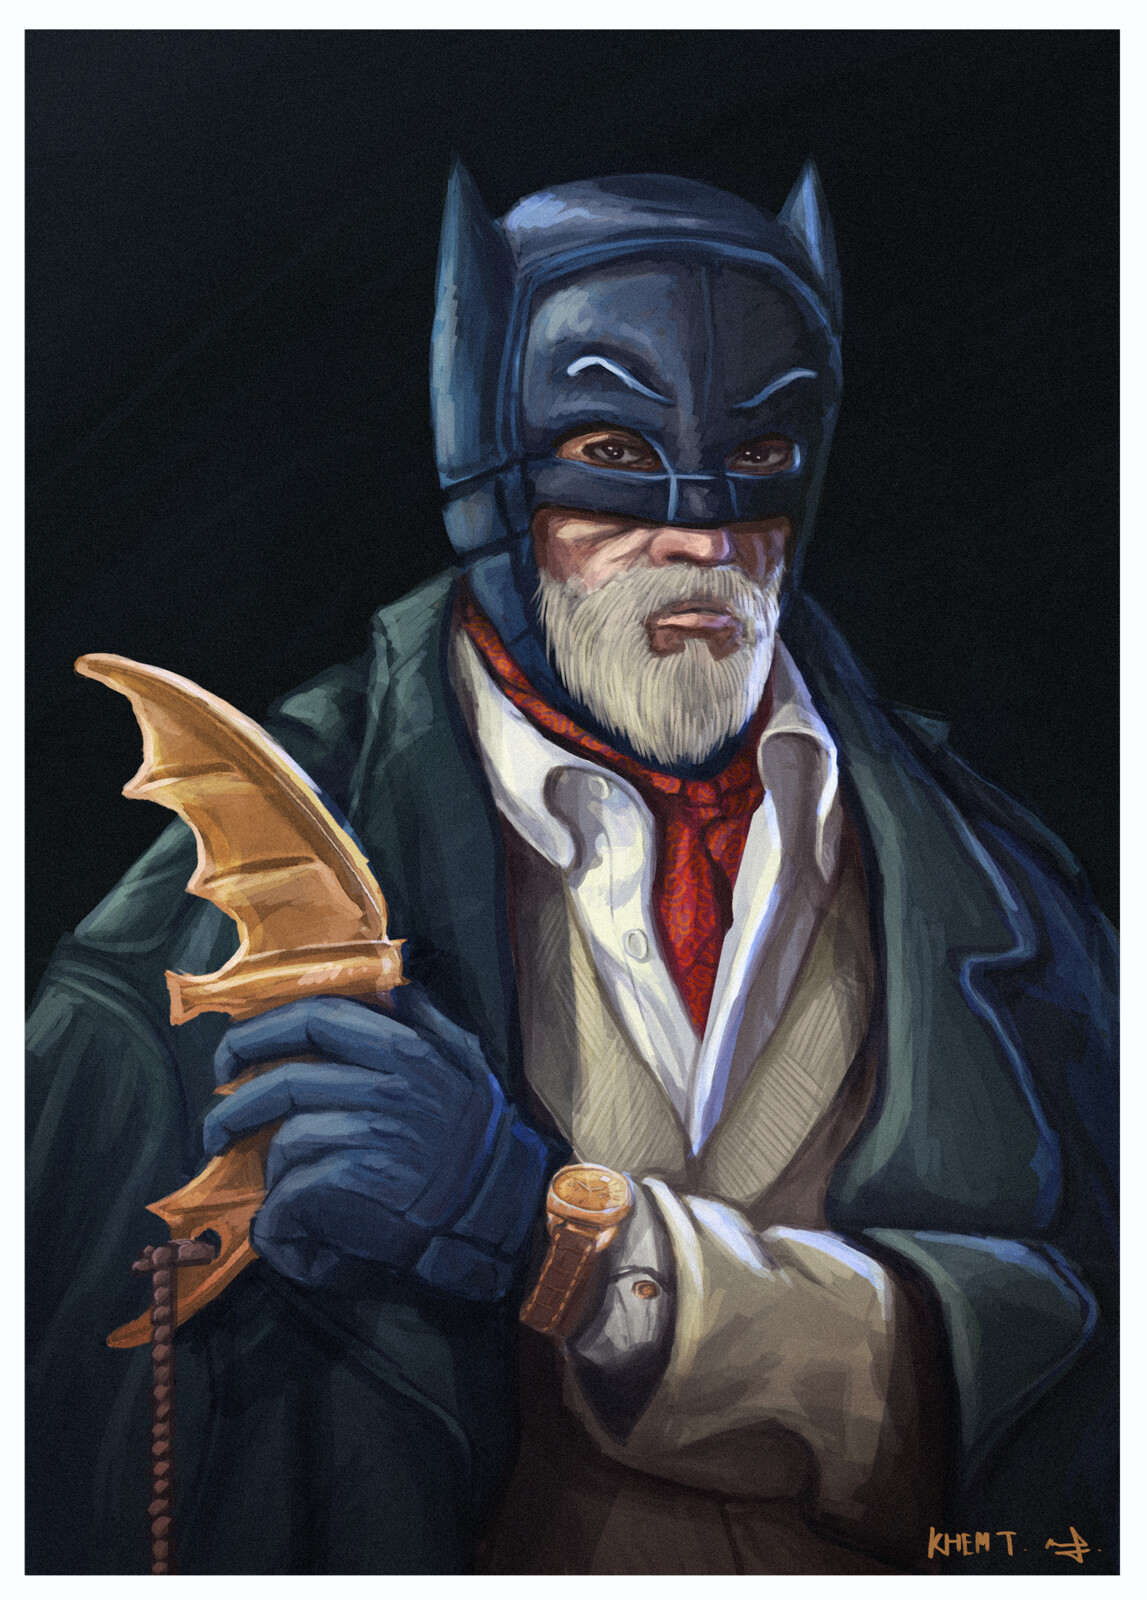 BATMAN GOLDEN AGE ( Adam west) : redesign portrait